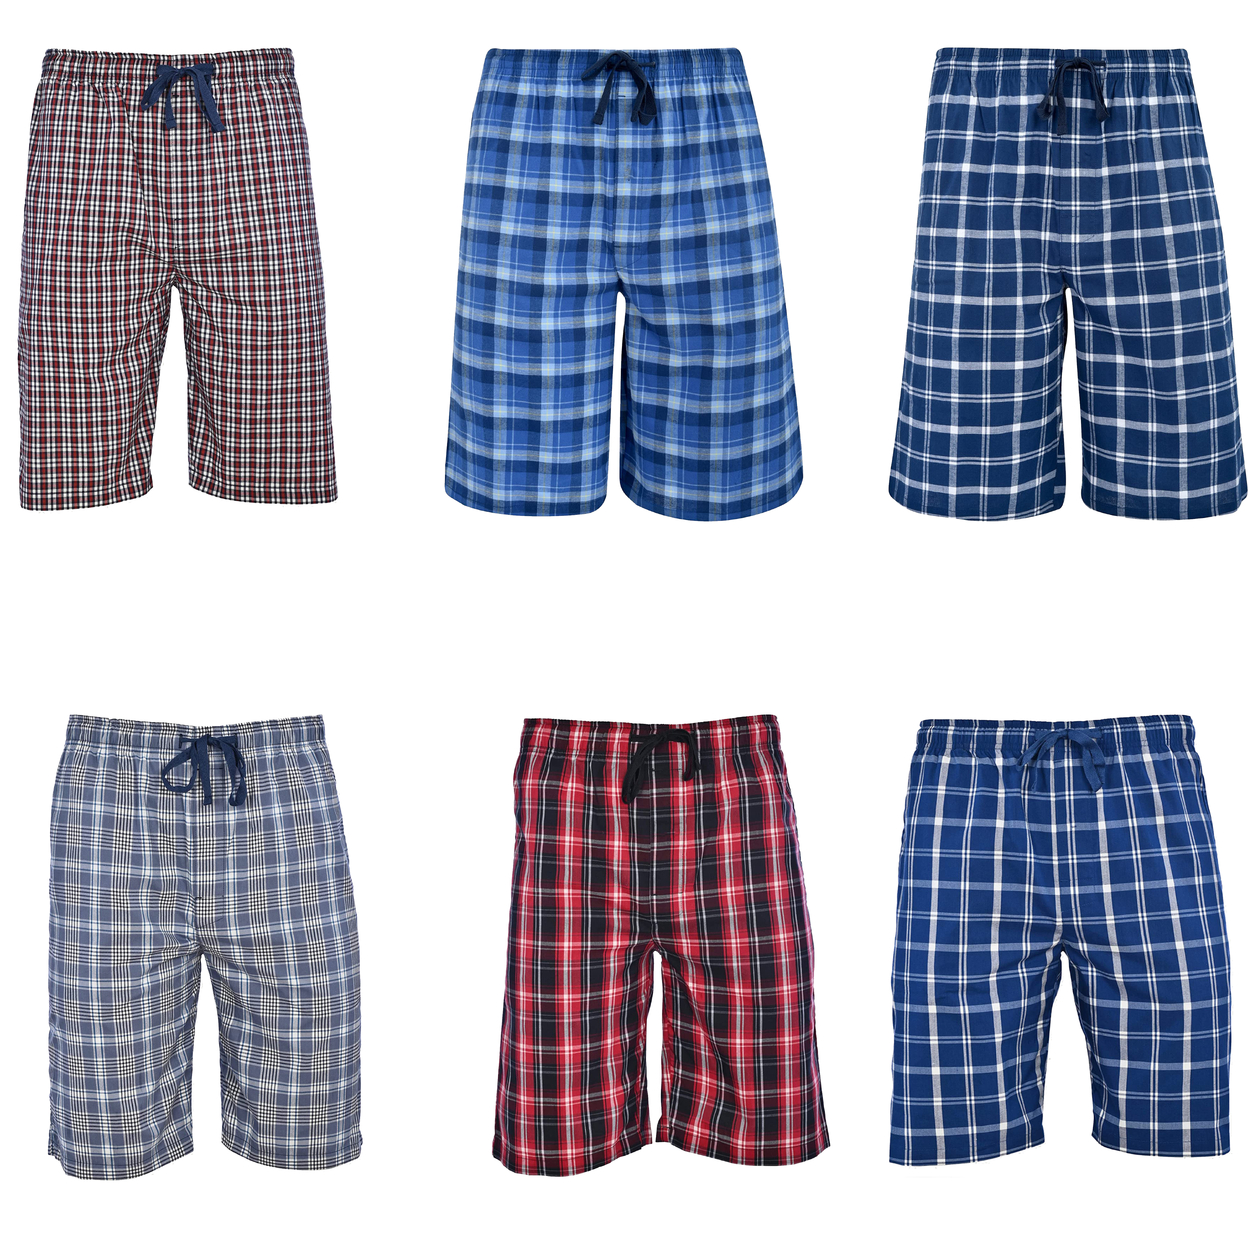 2-Pack: Men's Ultra Soft Plaid Lounge Pajama Sleep Wear Shorts - Blue & Blue, X-large